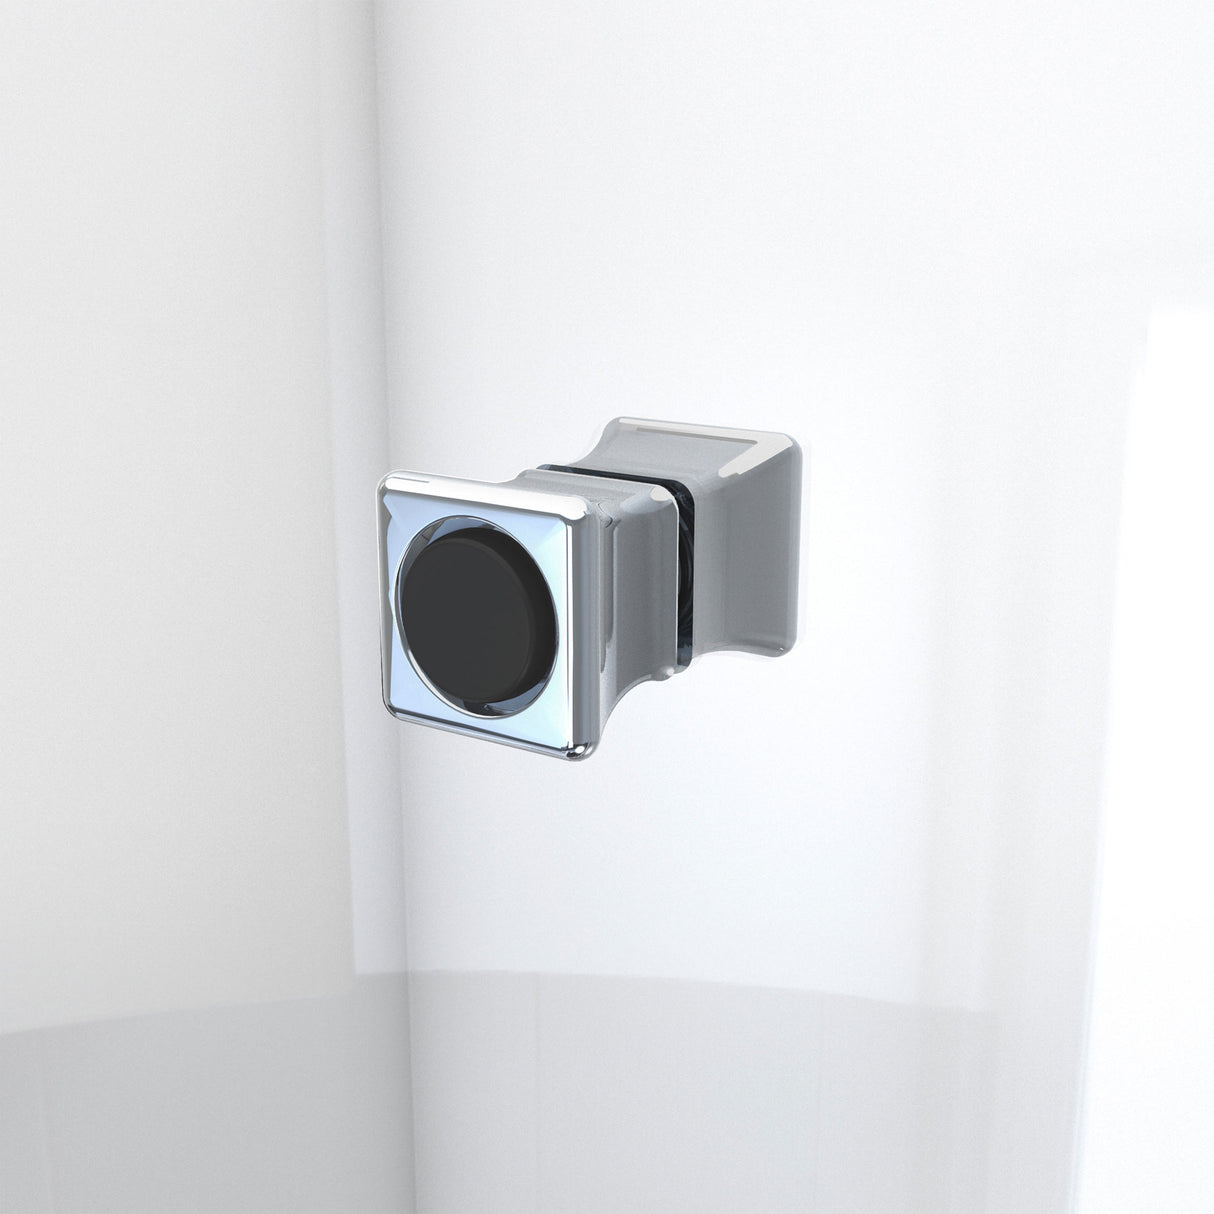 DreamLine Aqua-Q Fold 36 in. D x 36 in. W x 76 3/4 in. H Frameless Bi-Fold Shower Door in Chrome with White Acrylic Kit